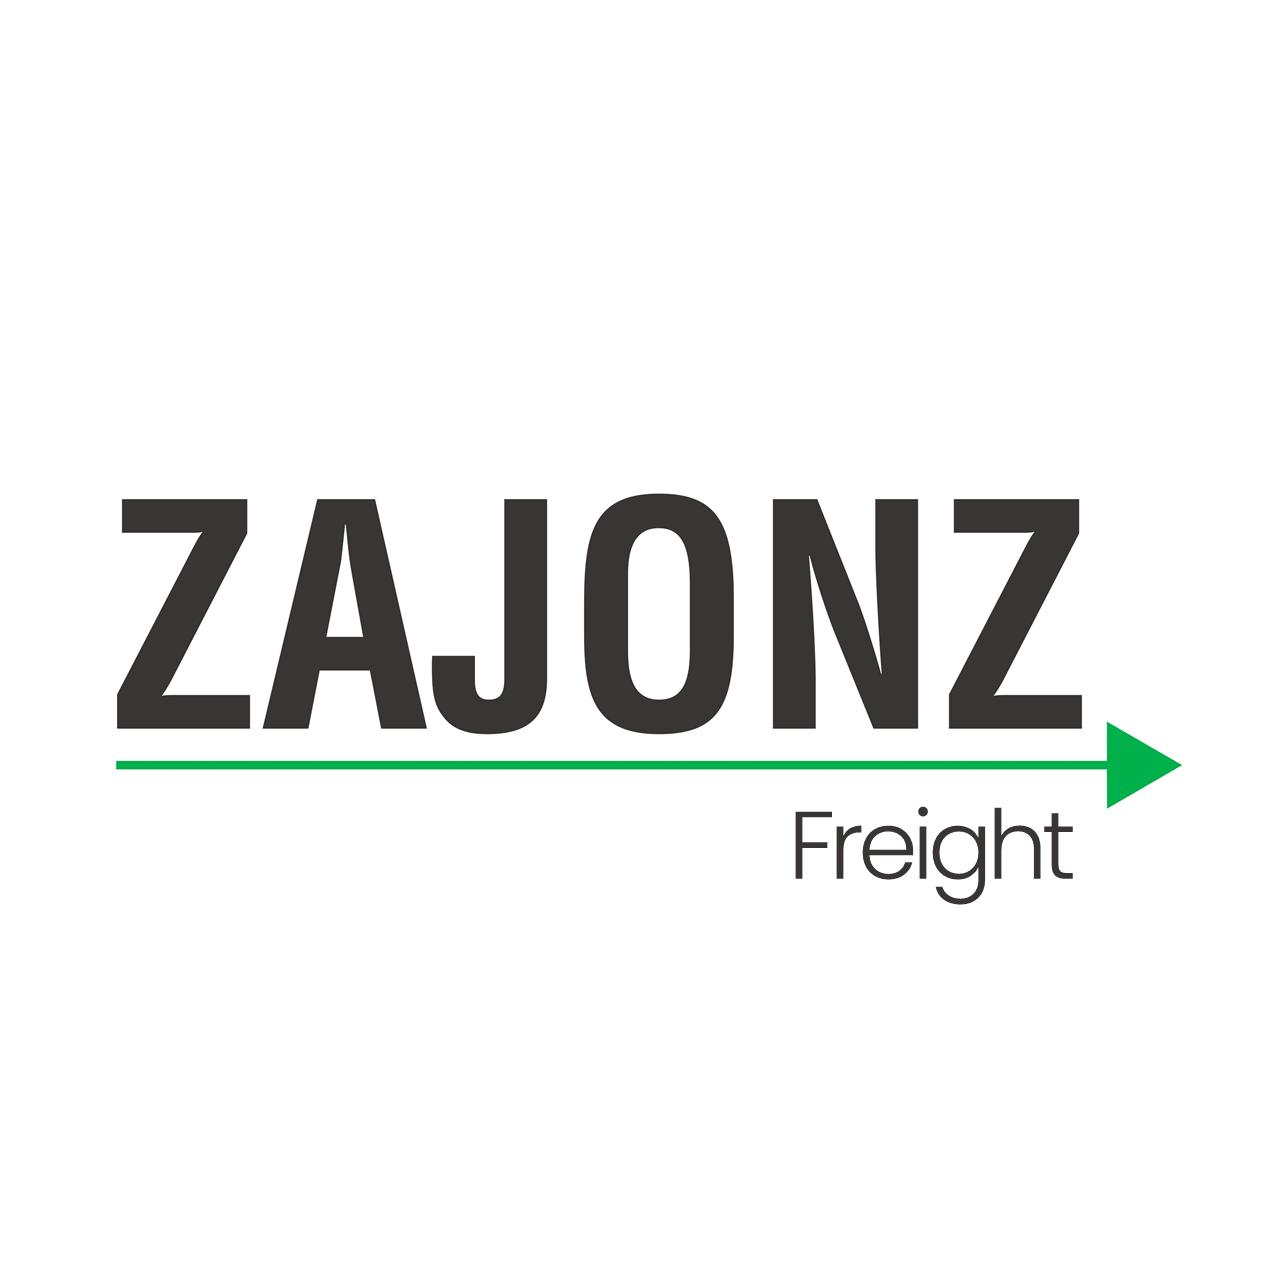 Zajonz Freight GmbH in Dorsten - Logo